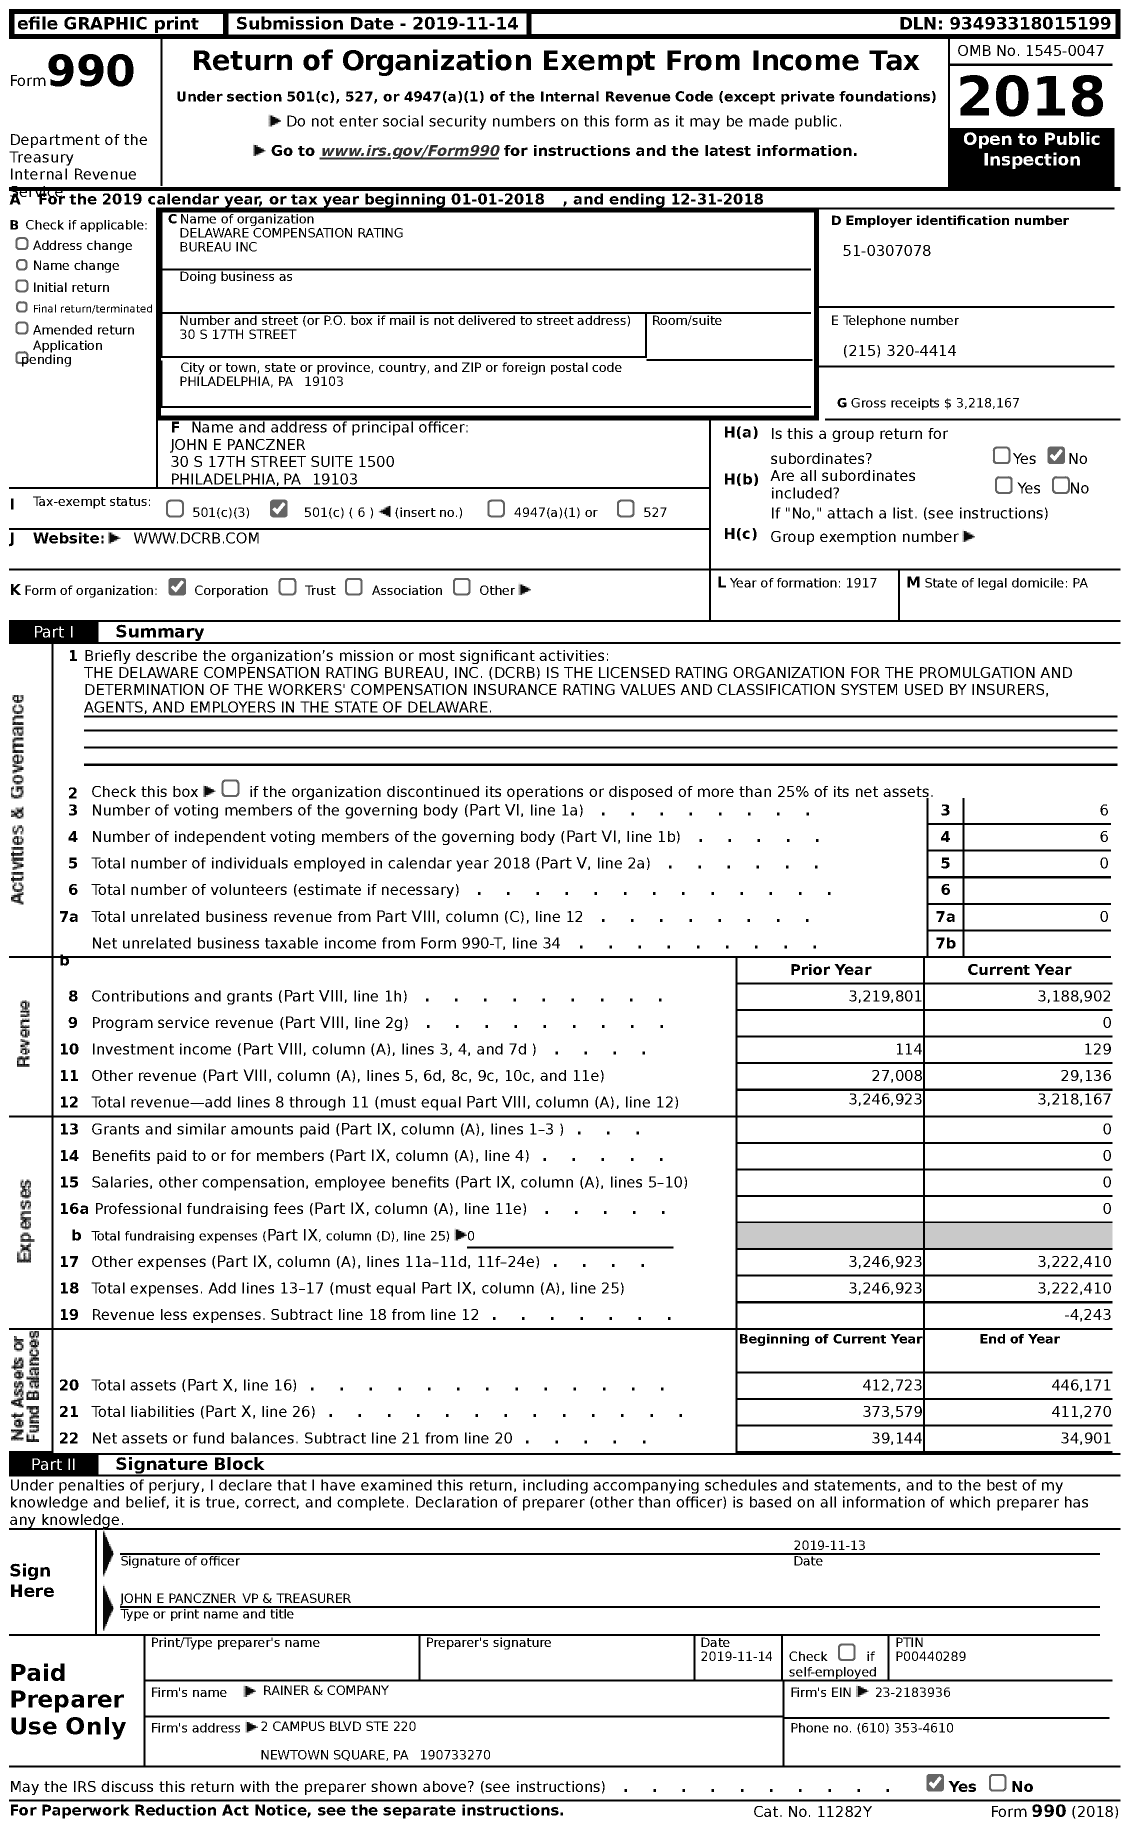 Image of first page of 2018 Form 990 for Delaware Compensation Rating Bureau (DCRB)